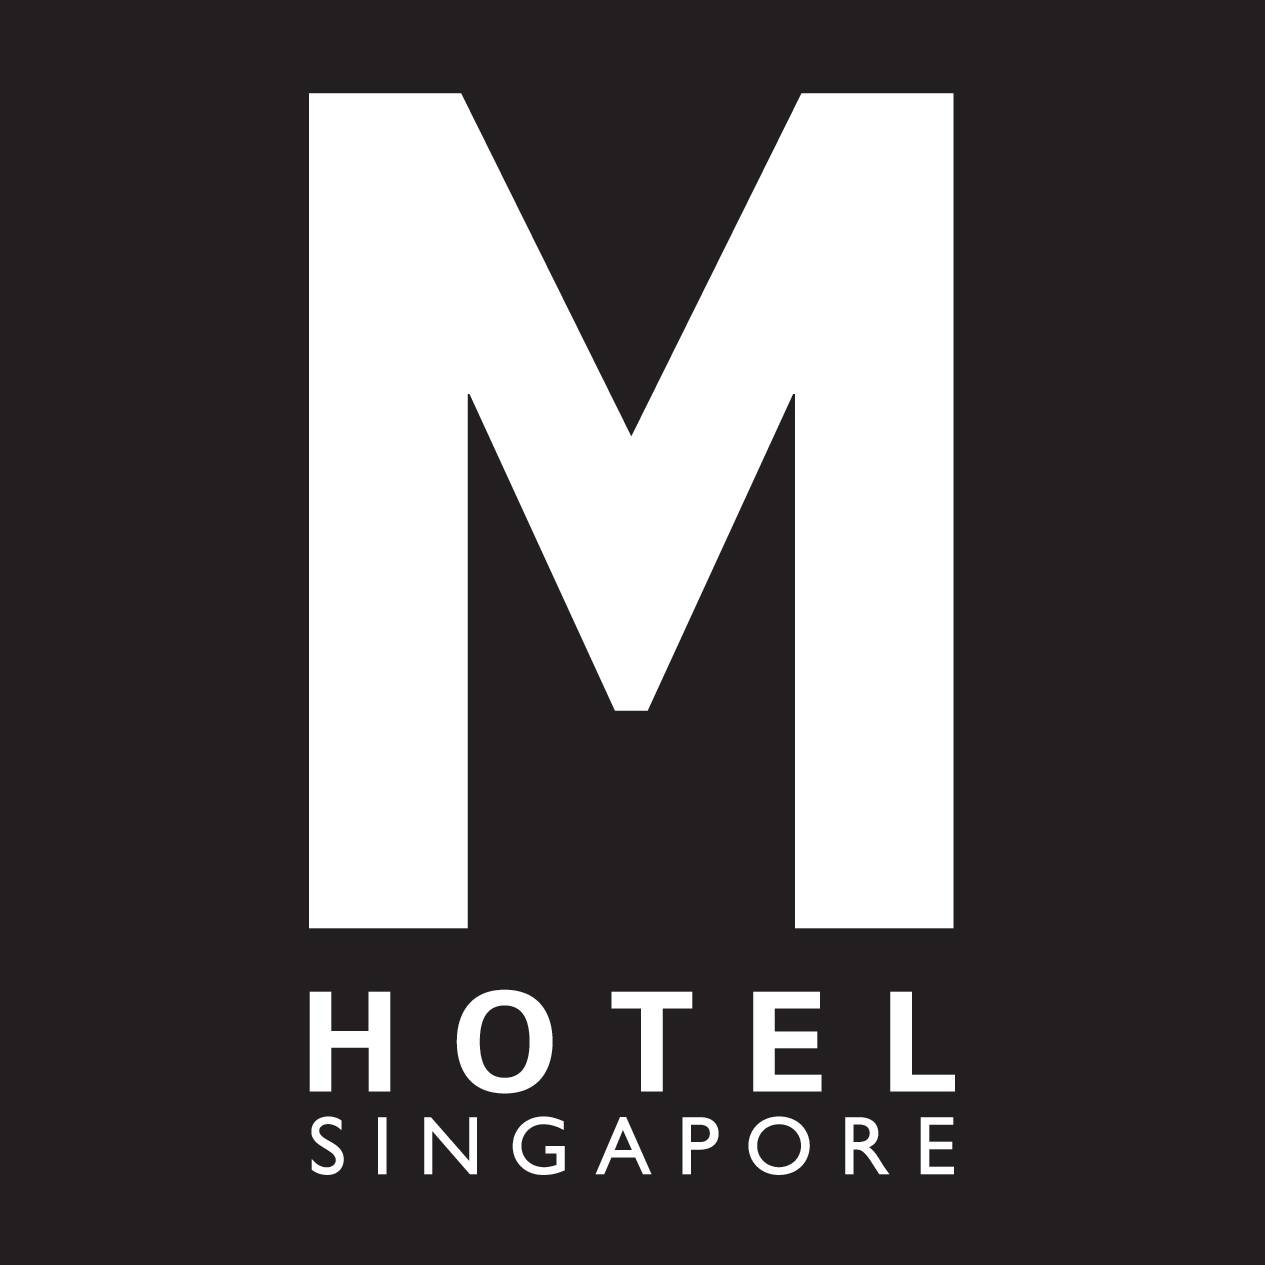 M Hotel - Logo